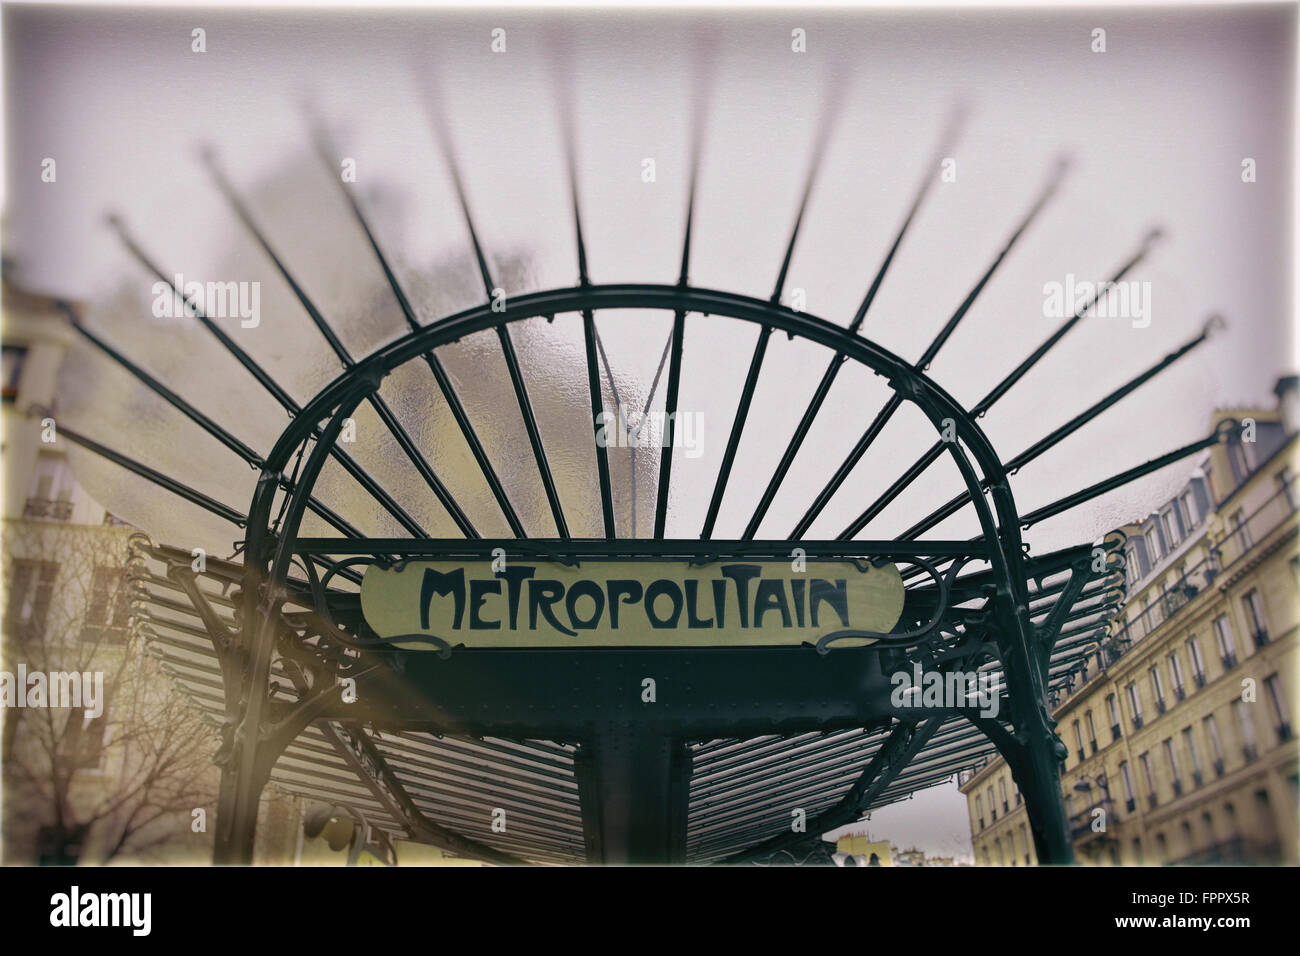 Parisian metropolitain - underground sign Stock Photo